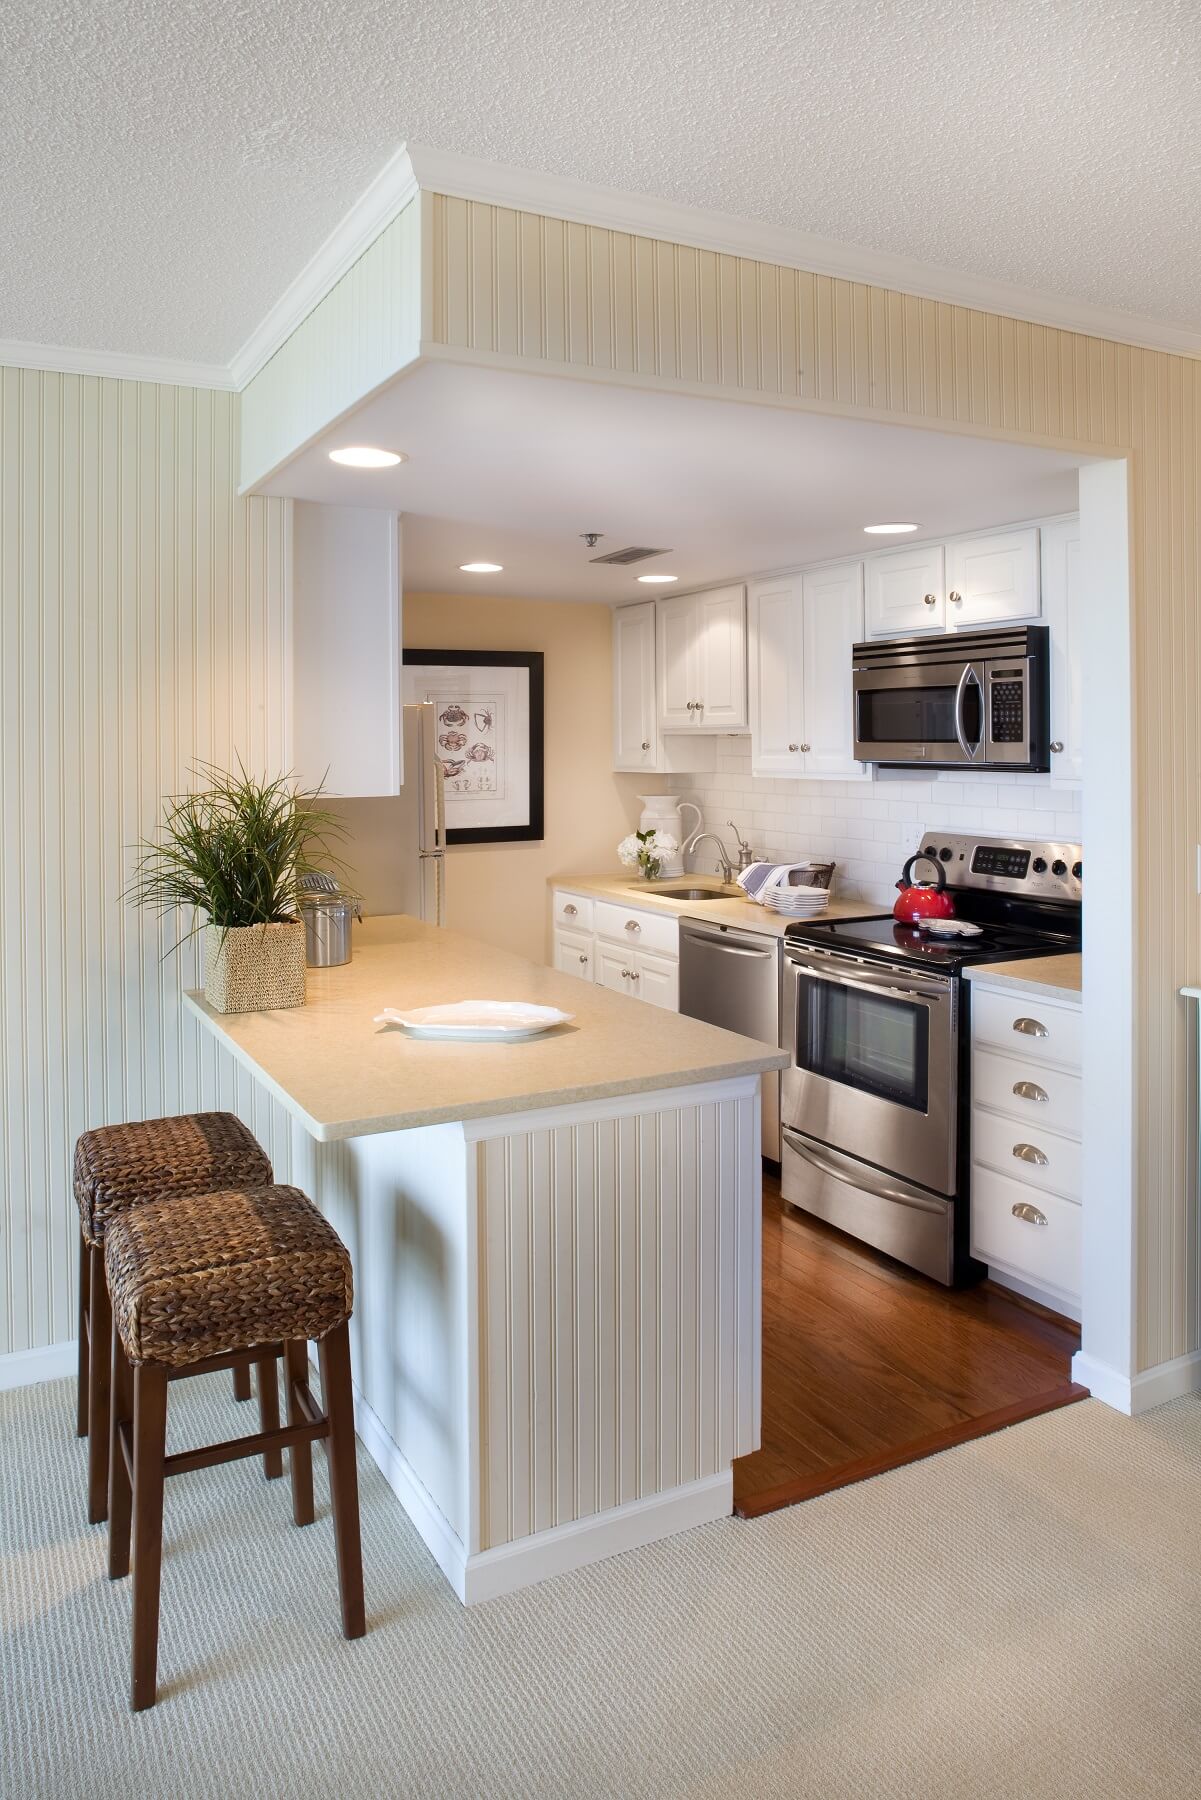 kitchen small decor room idea adding vertical lines height 2021 homebnc